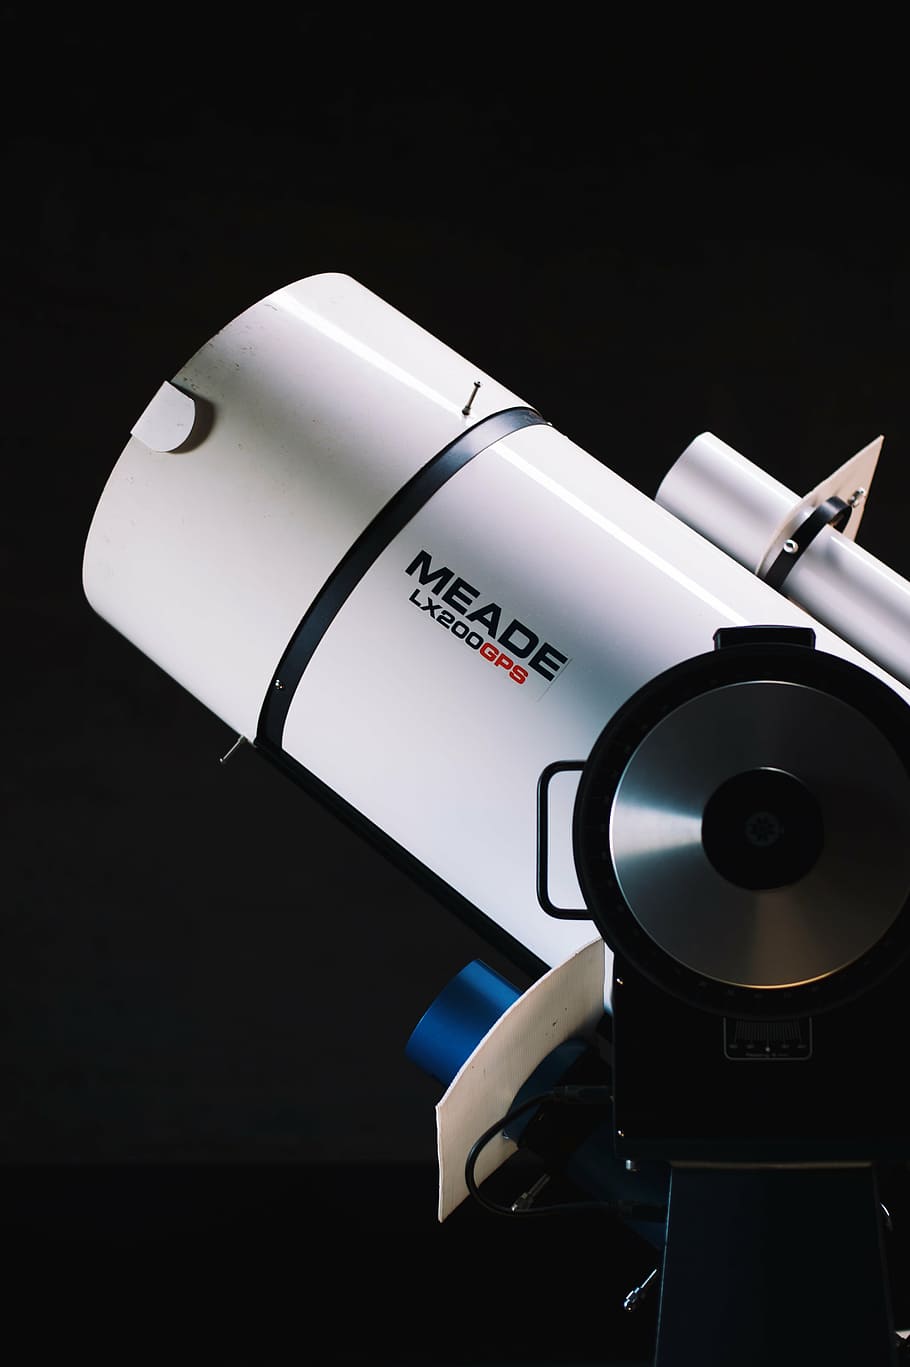 白, 黒, ミードlx 200gps望遠鏡, lx200gps, 光学, 機器, 顕微鏡, 望遠鏡, 監視, レンズ-光学機器